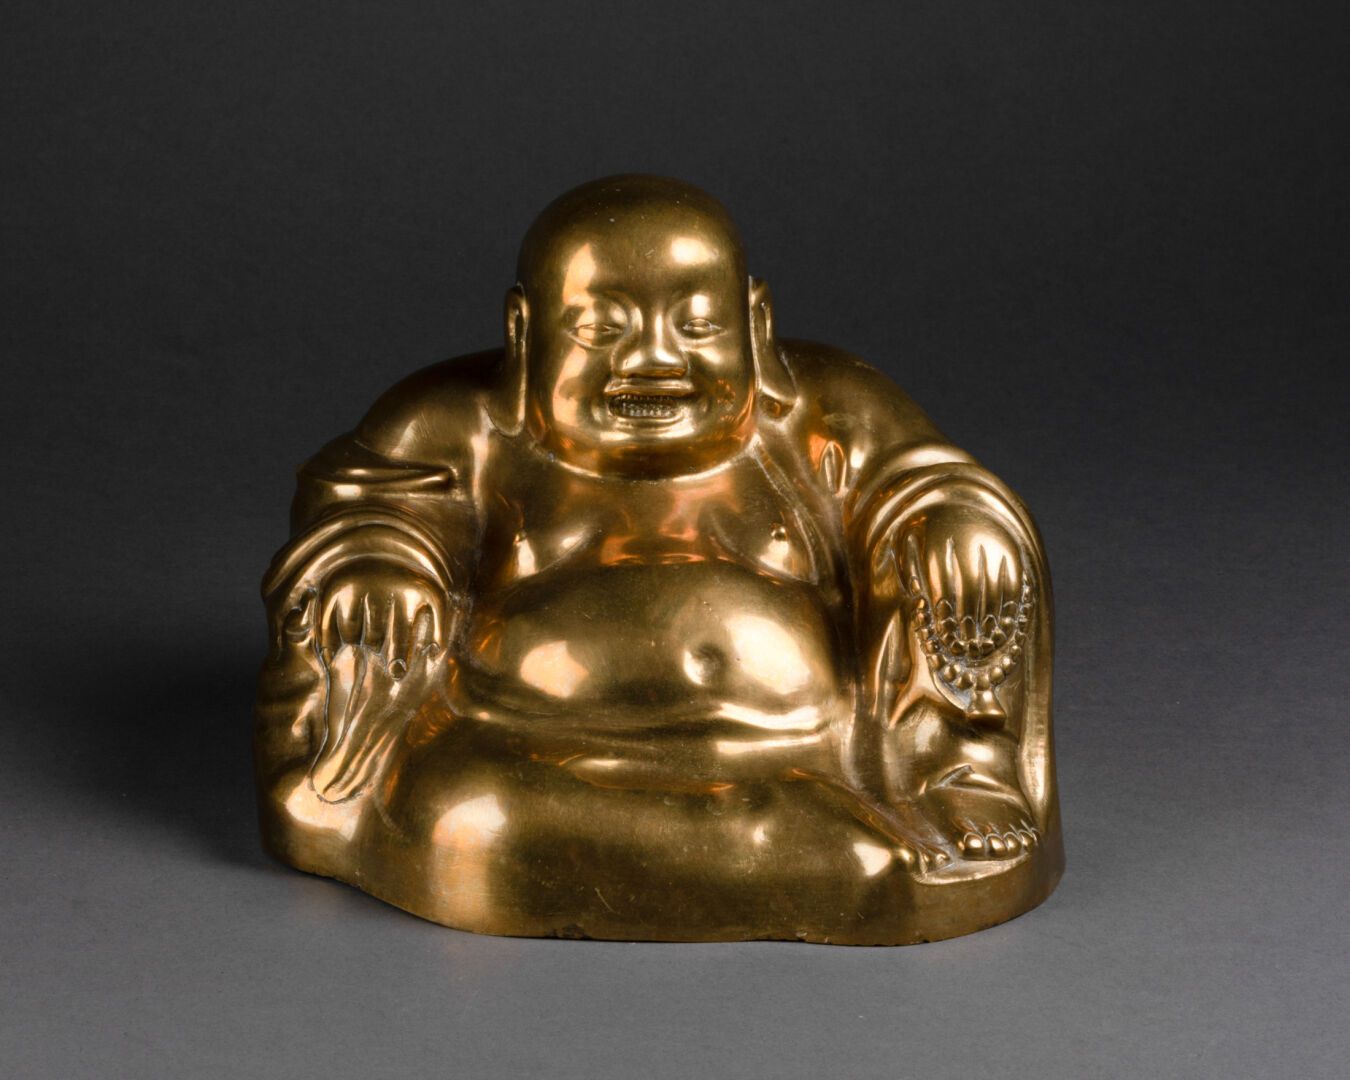 CHINE - Vers 1900 处于皇室地位的BUDAI放松了警惕

抛光的青铜

H.14 cm - L. 20 cm